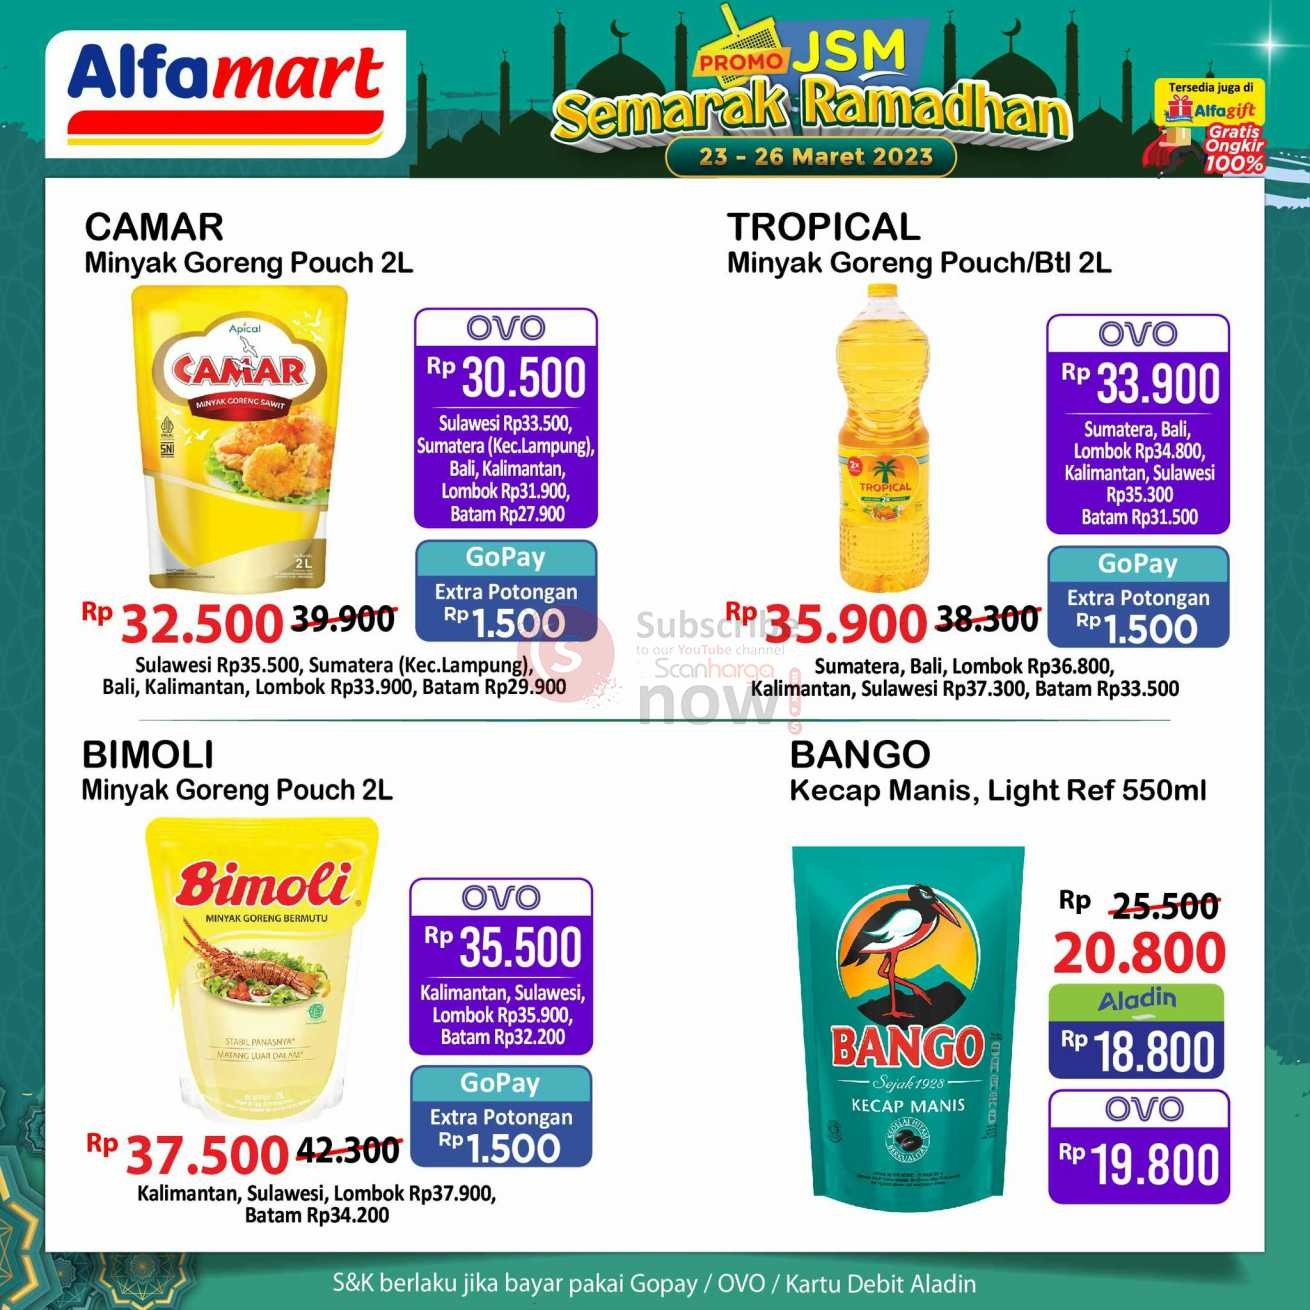 Katalog Promo JSM ALfamart Semarak Ramadan 2023, Dapatkan Minyak Goreng TROPICAL Pouch/Btl 2LRp 35.900